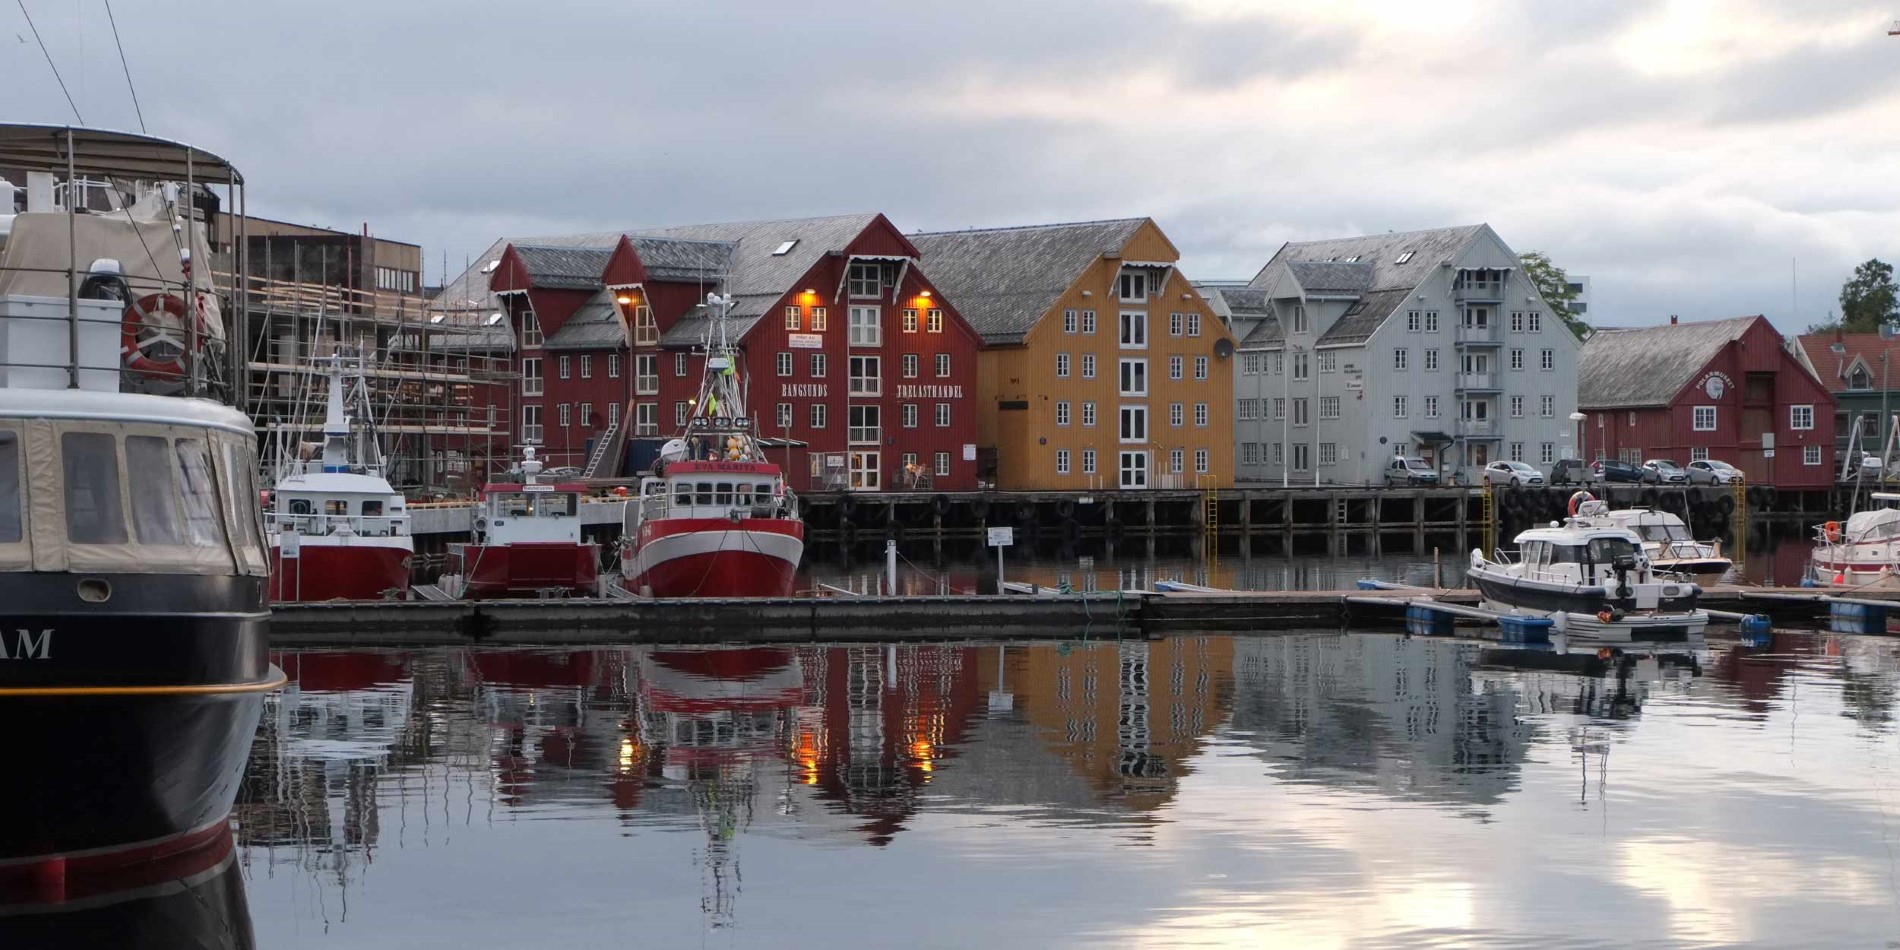 The port of Tromsø